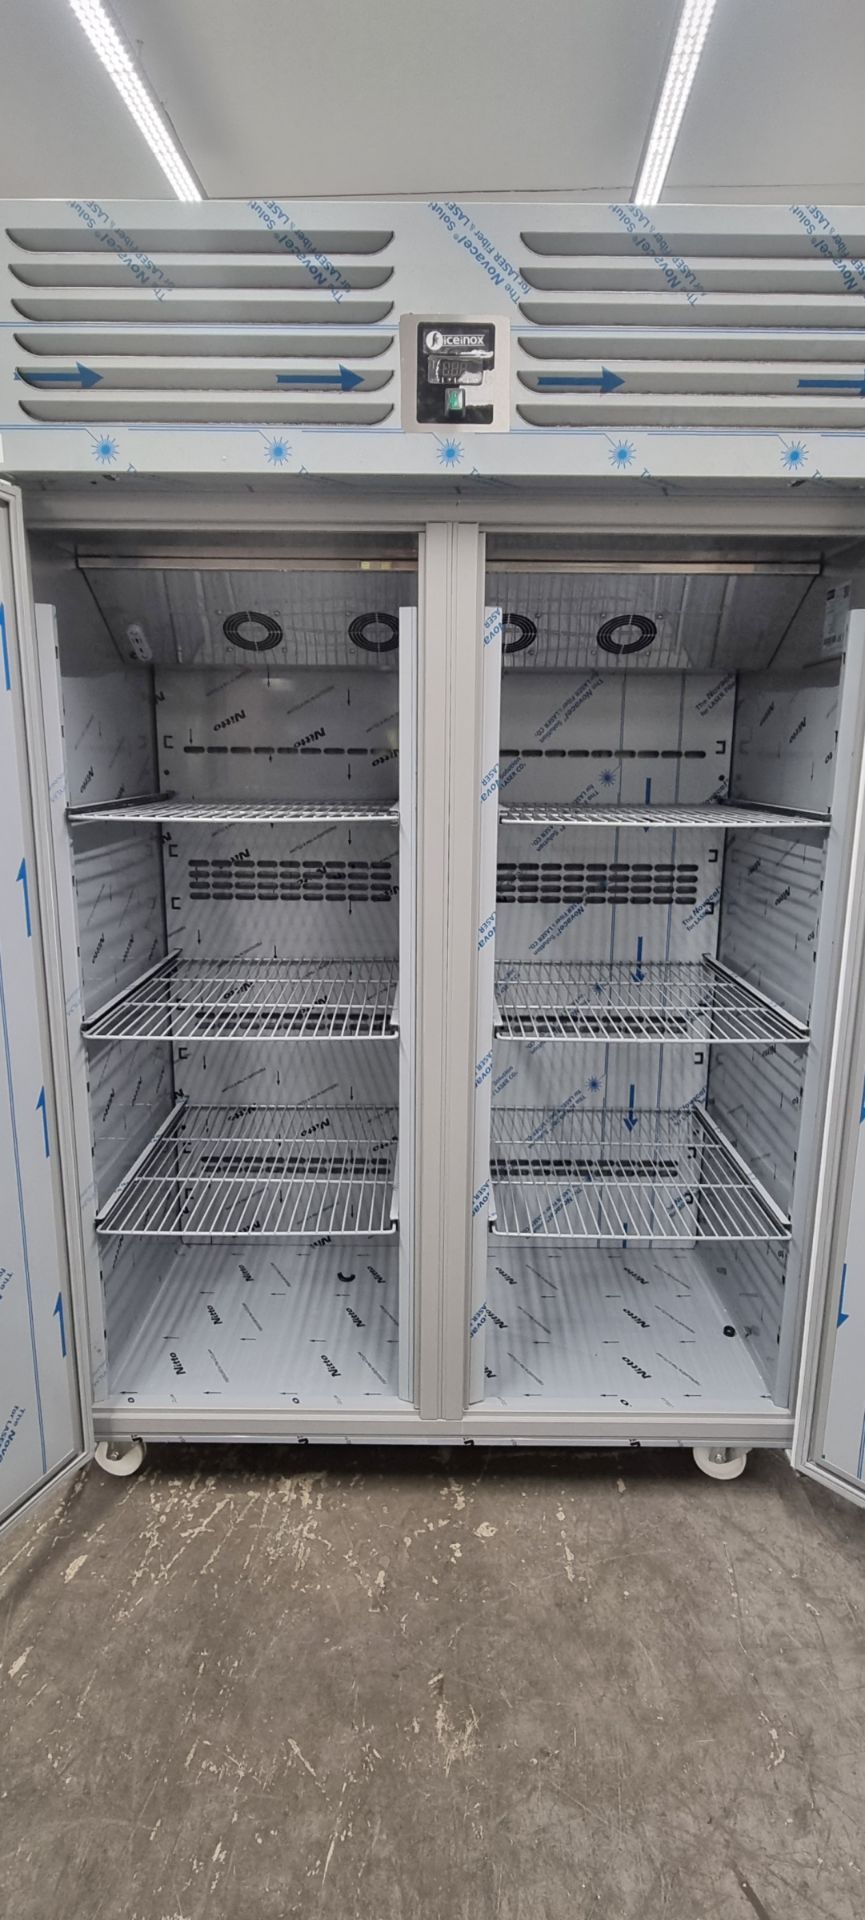 Iceinox VTS 1340 CR stainless steel upright, double door refrigerator - Image 3 of 11